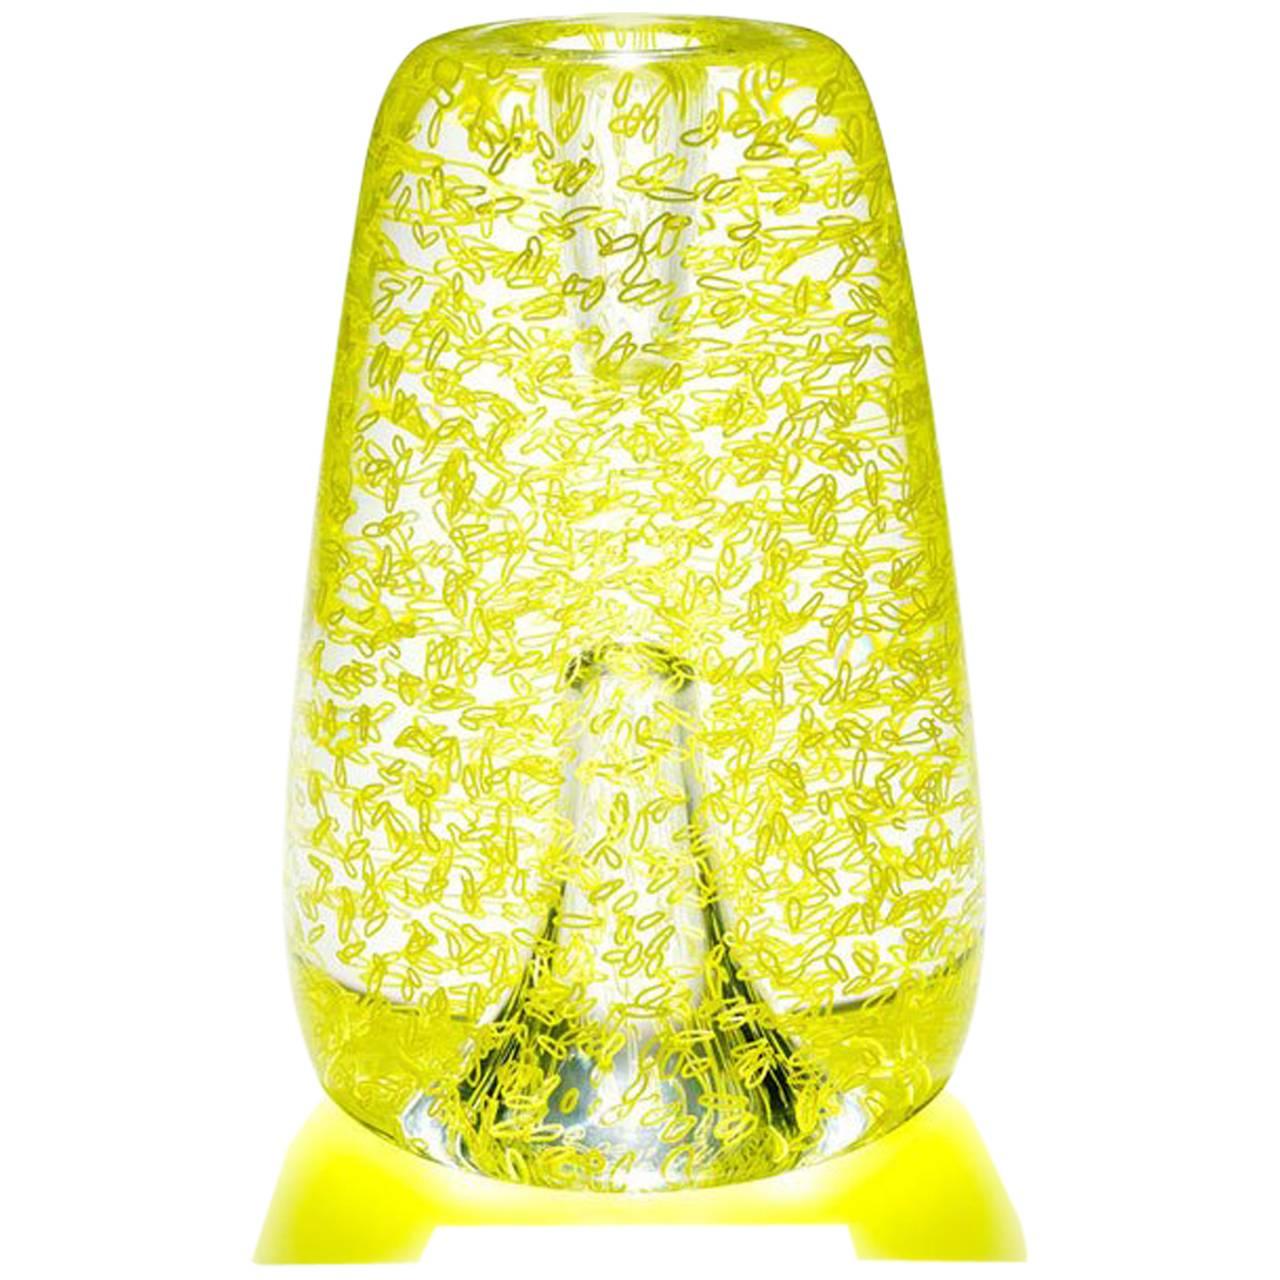 Andrea Branzi, "Sciami" Plexiglass Vase, Prototype, Metea, Italy